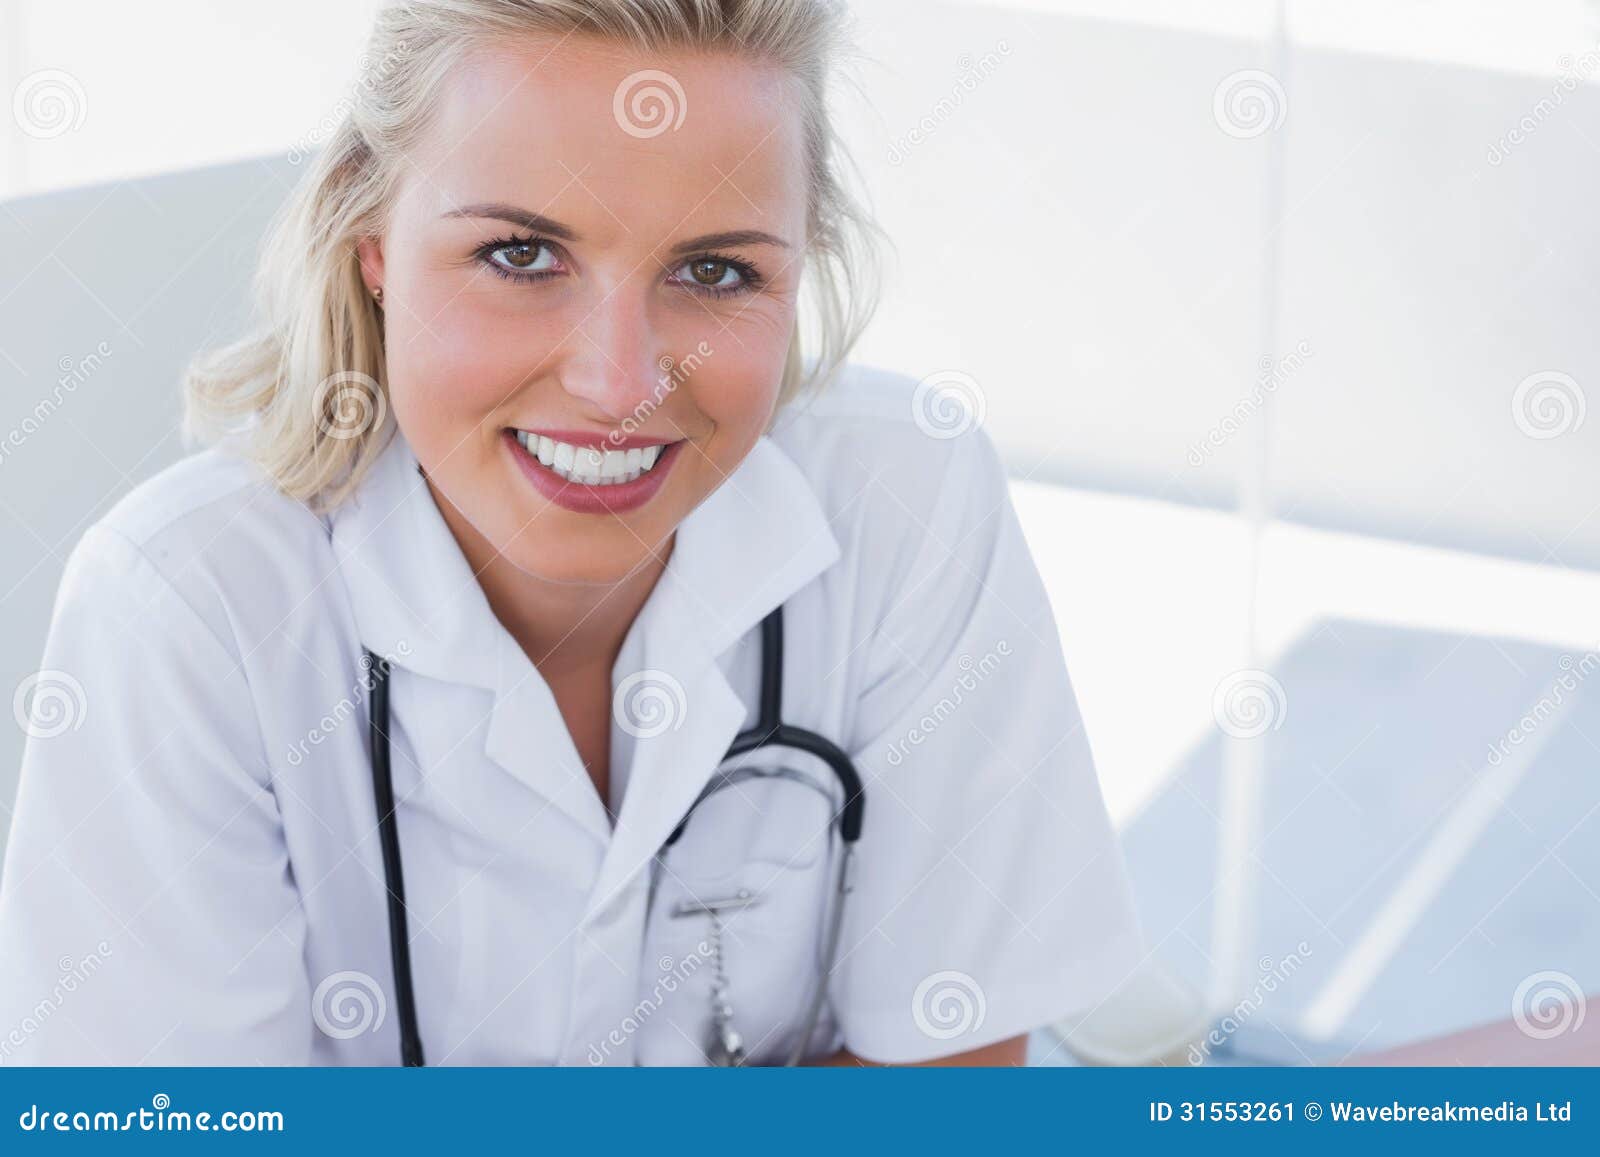 portrait of a pretty nurse